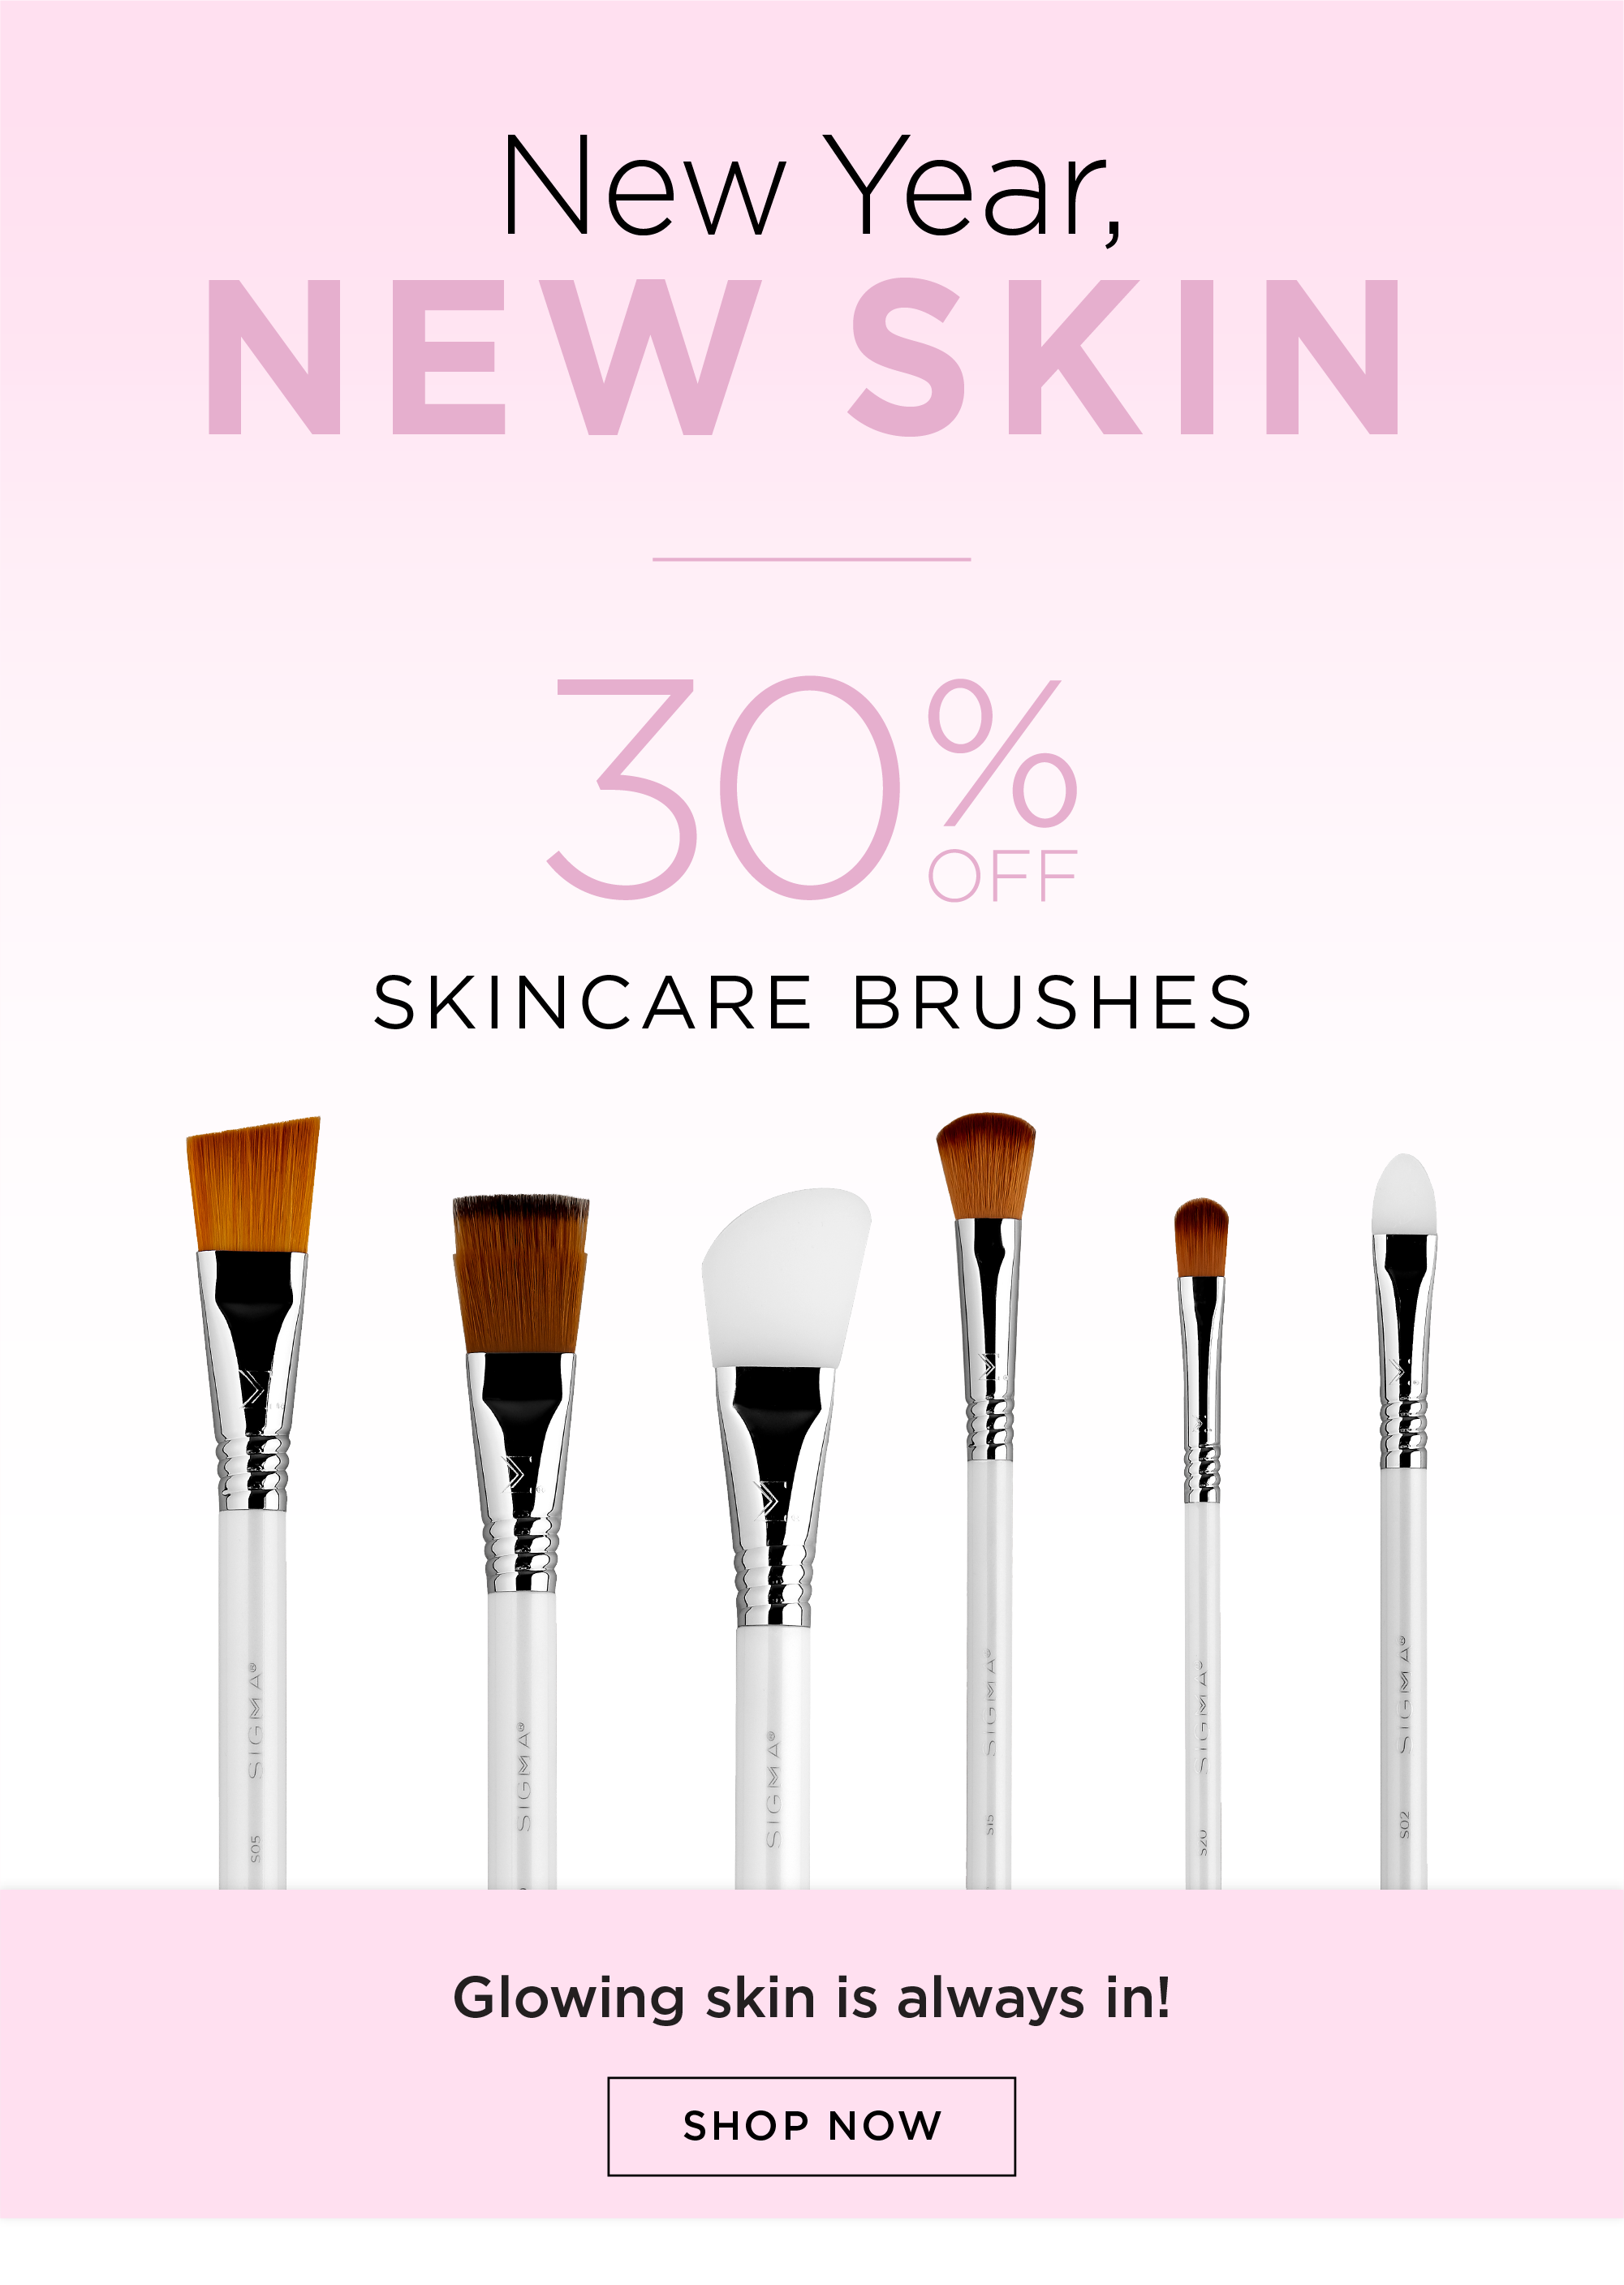 New Year New Skin – 30% Off Skincare Brushes